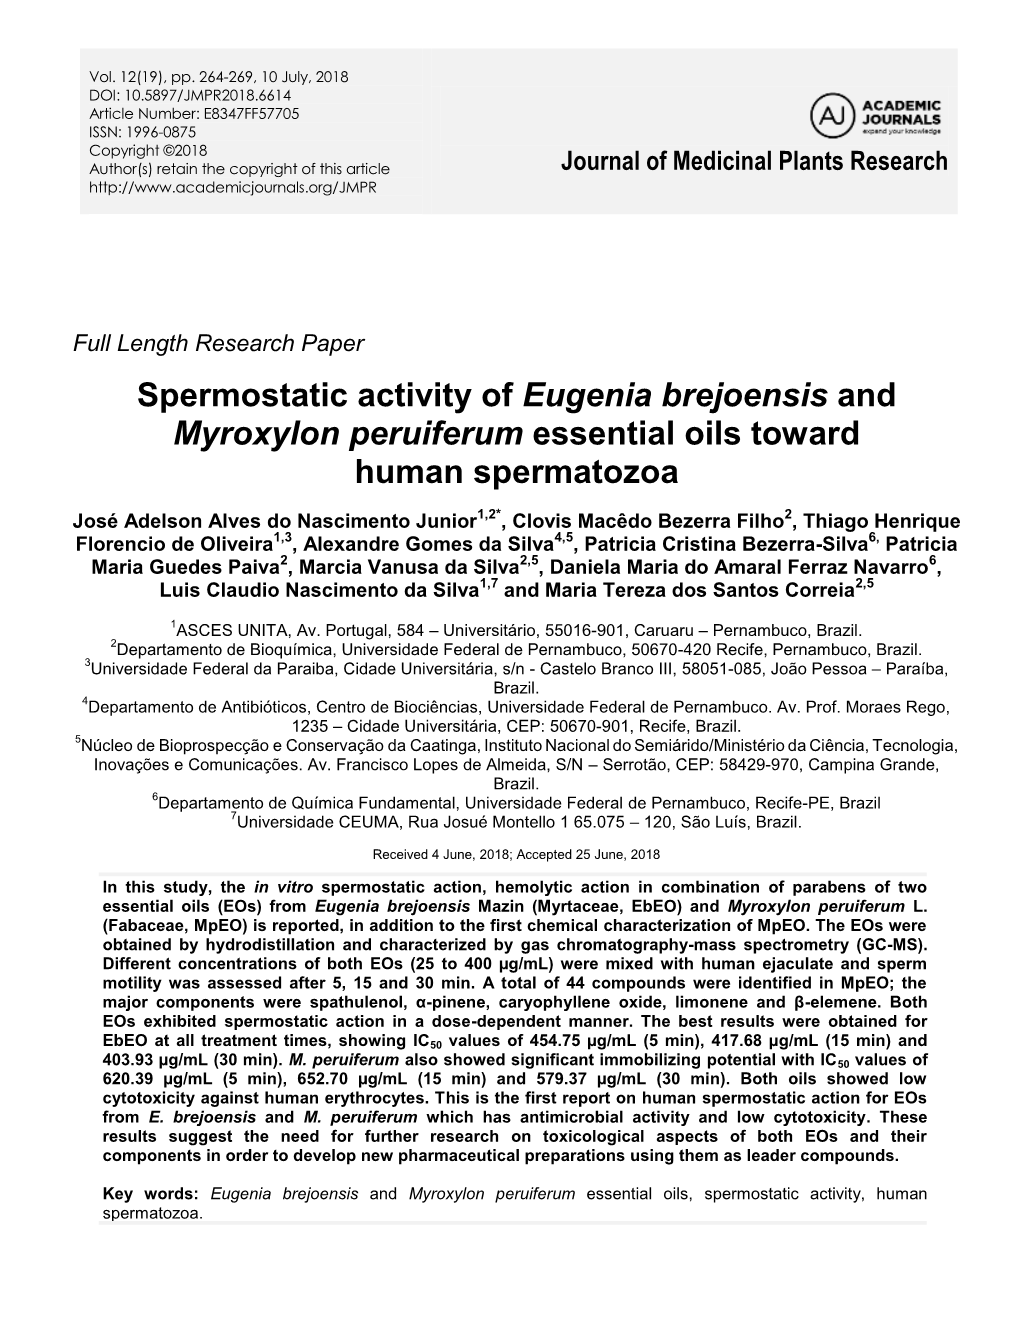 Spermostatic Activity of Eugenia Brejoensis and Myroxylon Peruiferum Essential Oils Toward Human Spermatozoa